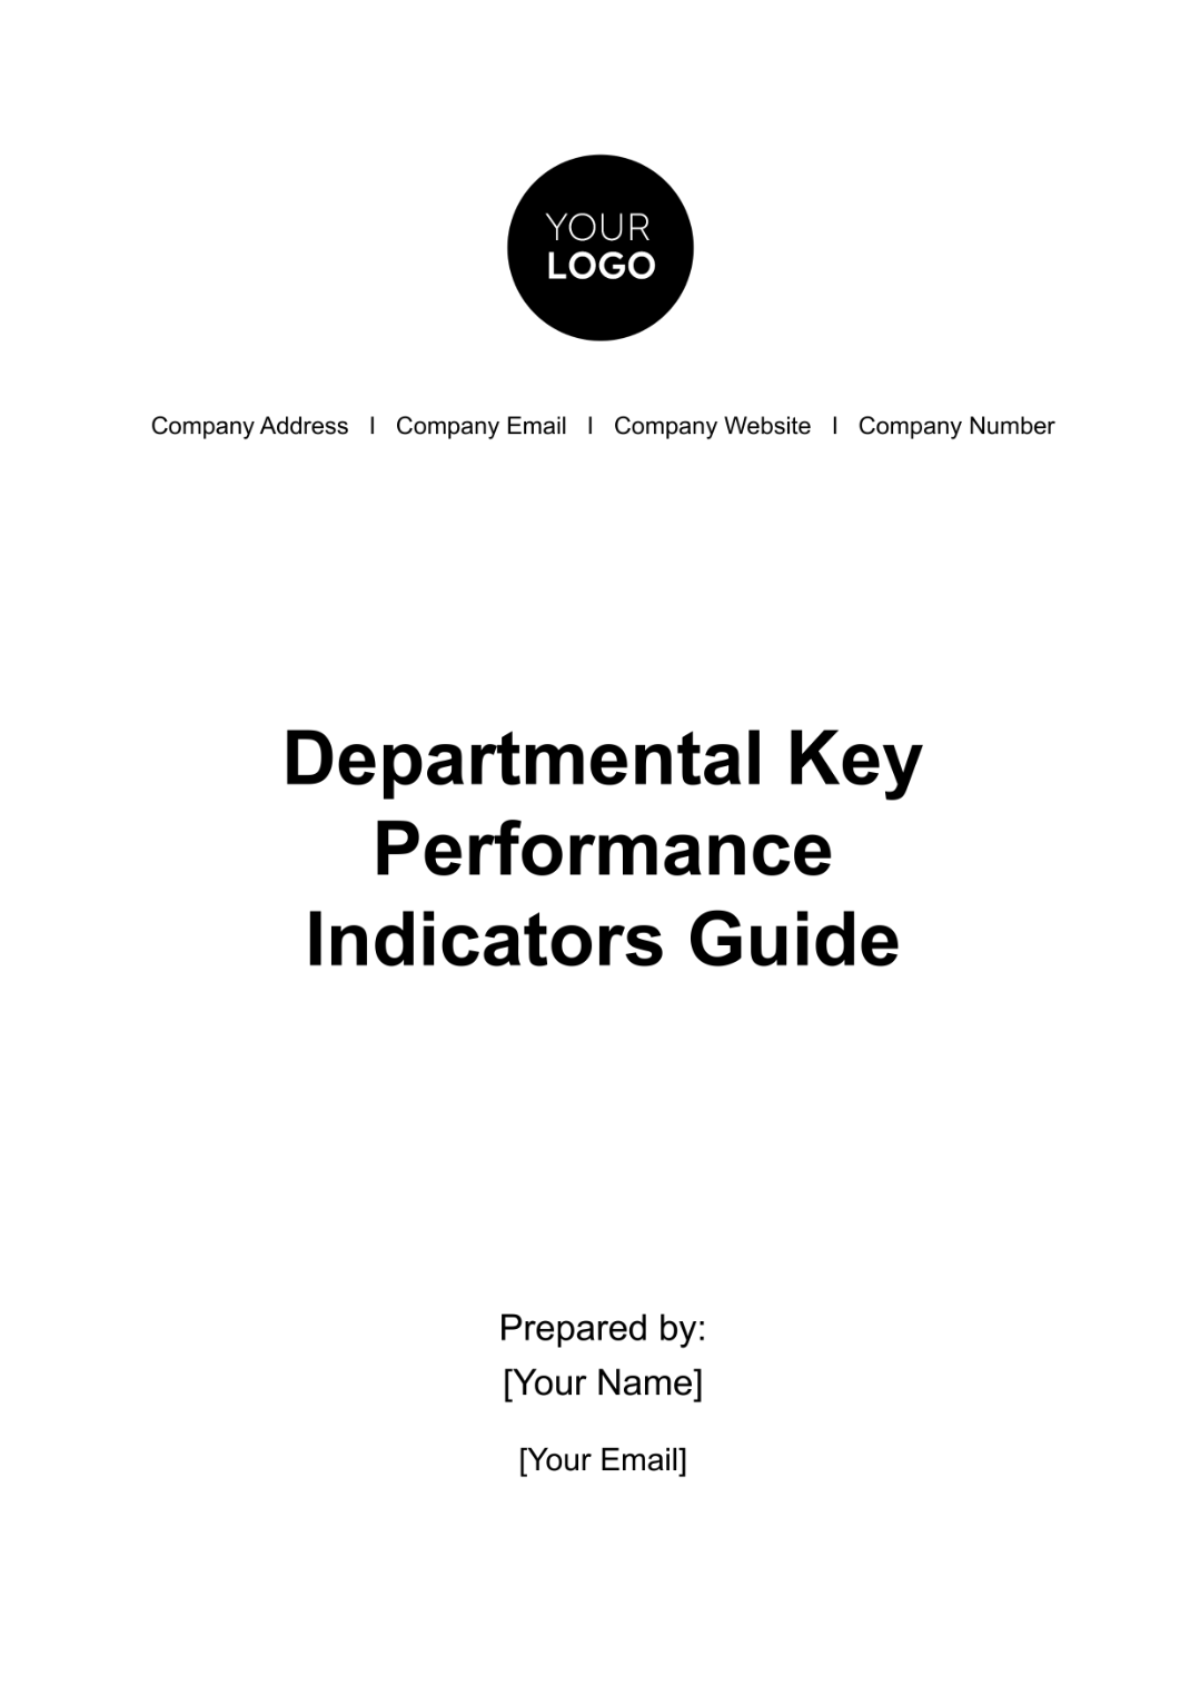 Free Departmental Key Performance Indicators Guide HR Template